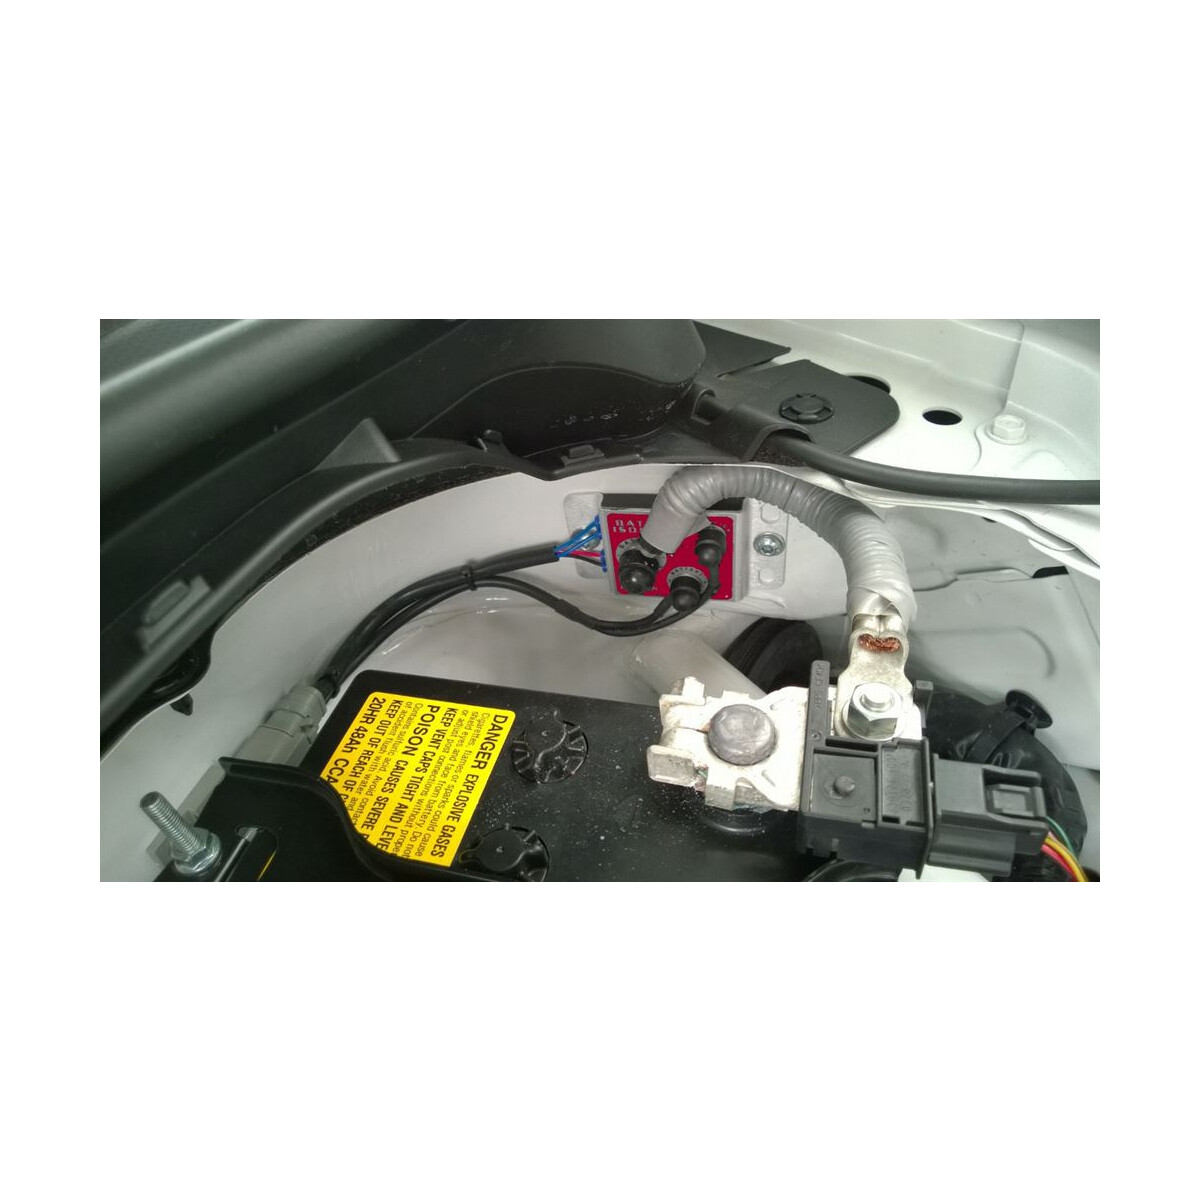 CARTEK Battery isolator for racing cars - FIA-compliant (CARTEK CK-BT-02)